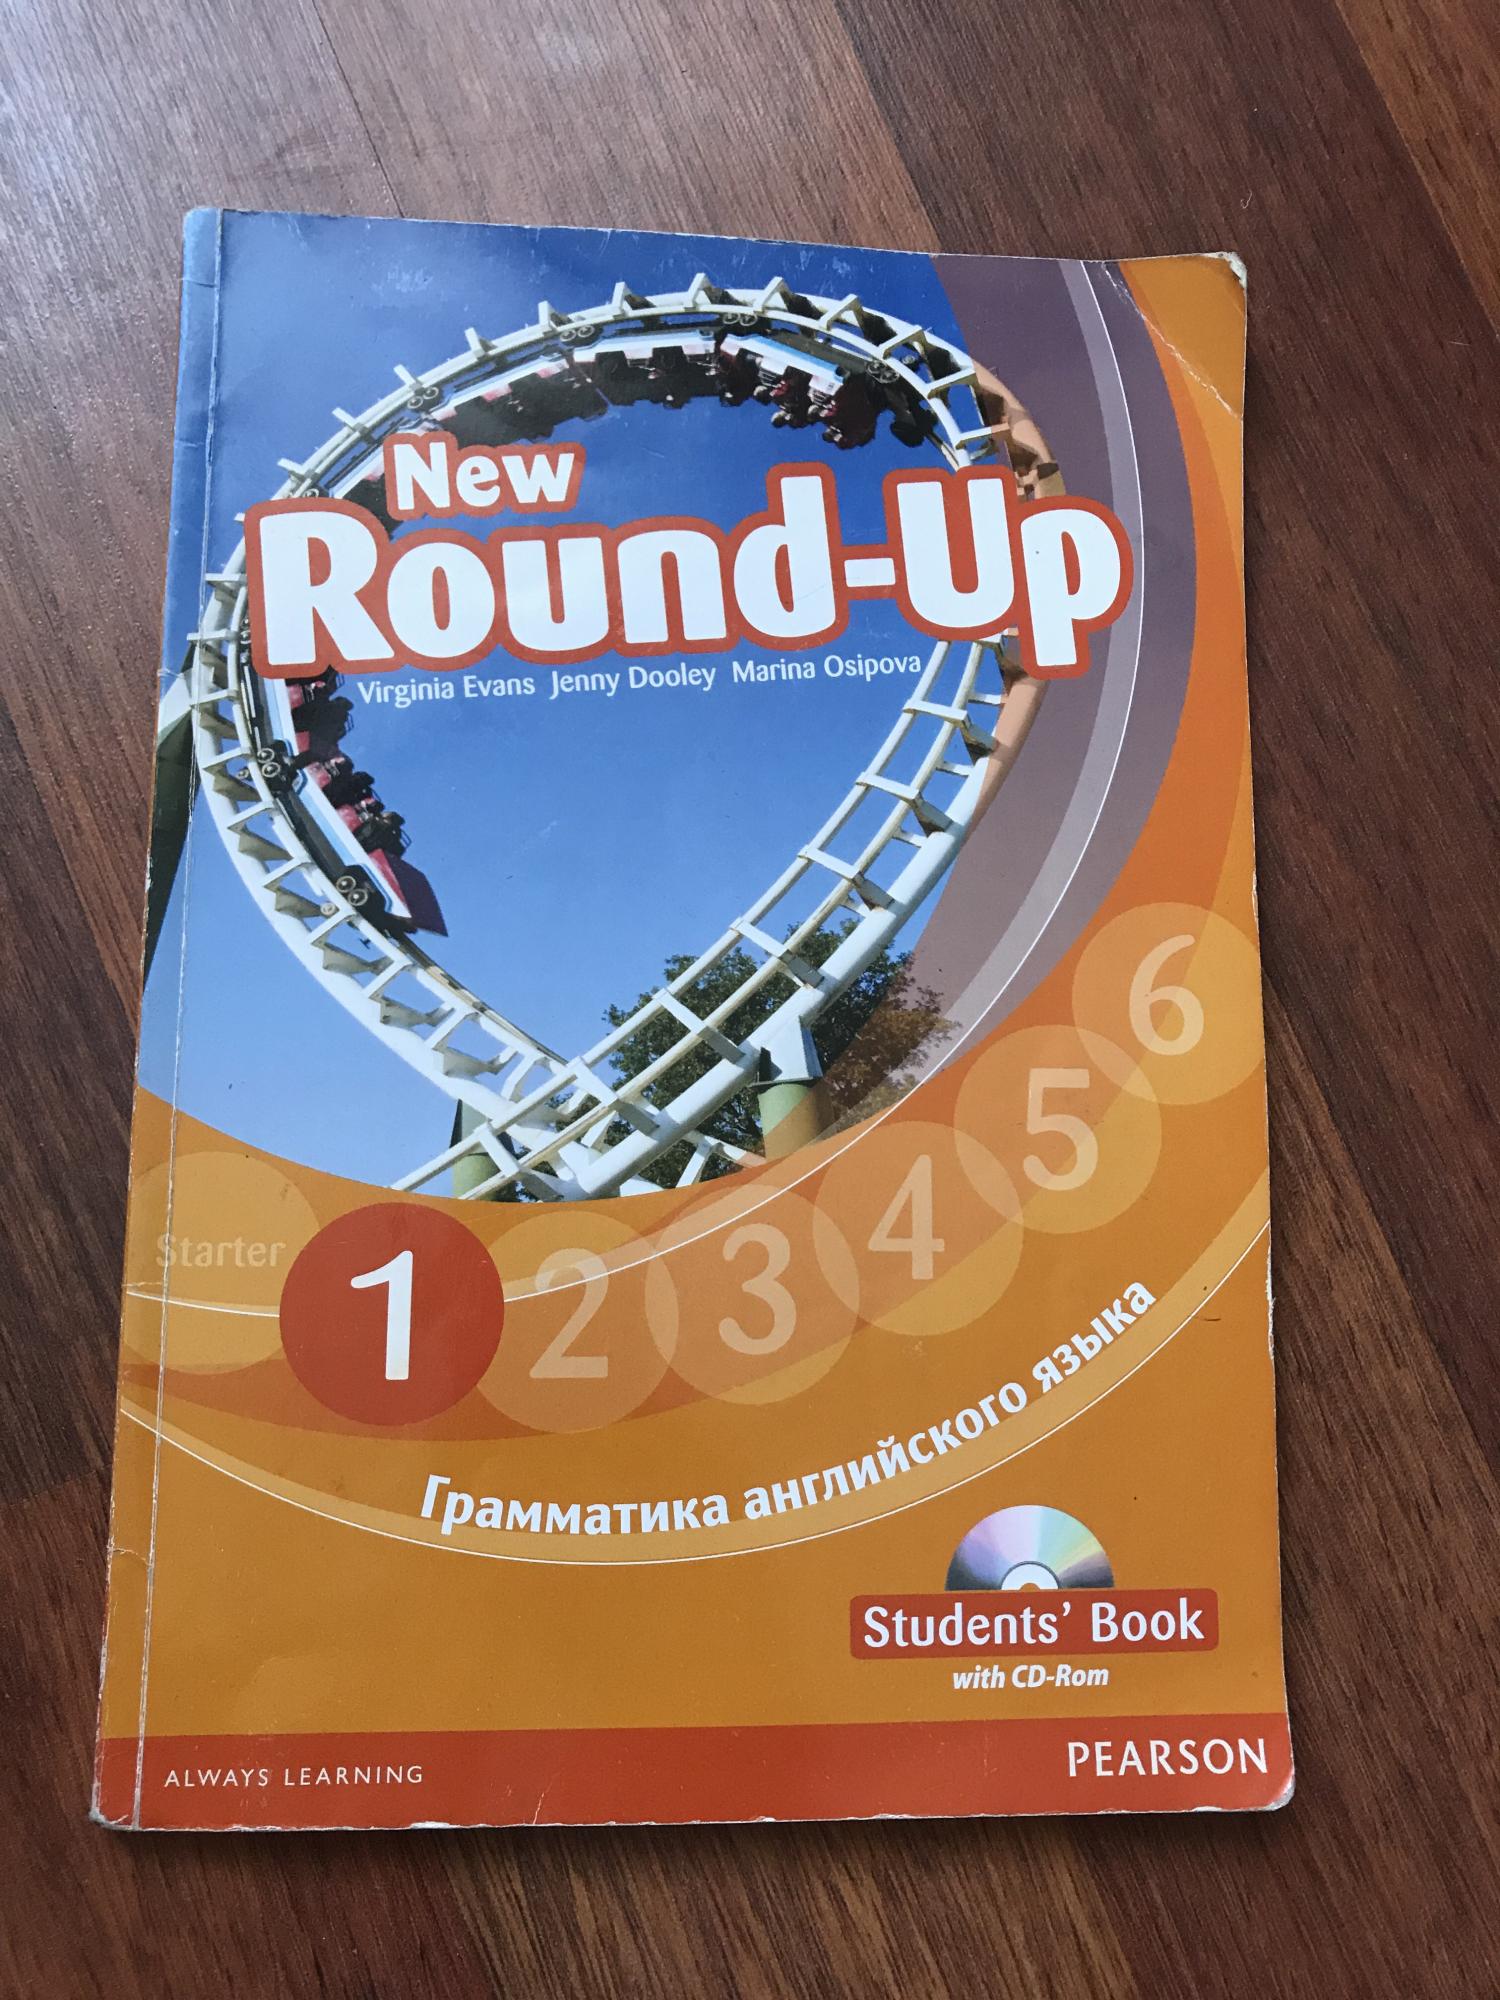 New round 4 students book. Round up 1 Virginia Evans. Книга New Round-up. Учебник Round up 1. Round up 1 учебник английского языка.